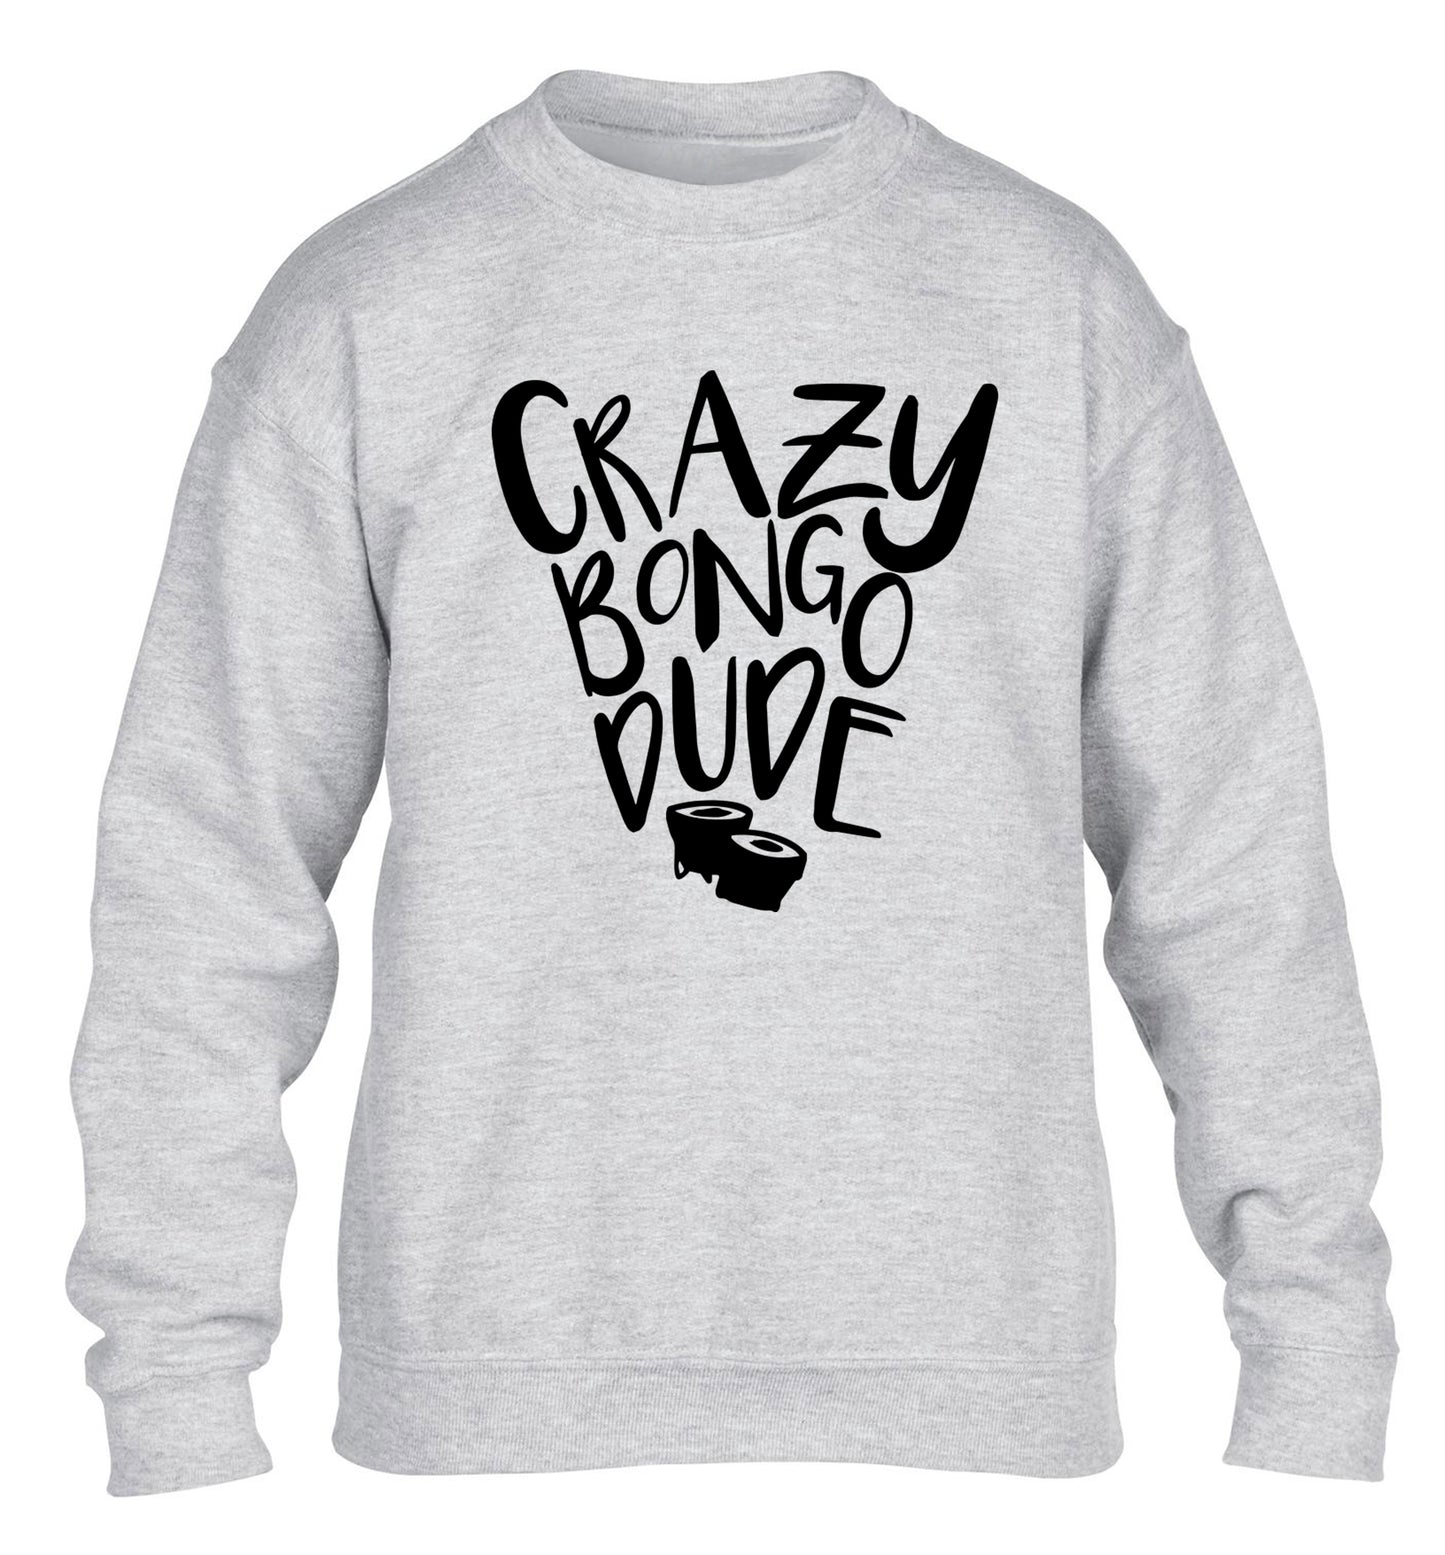 Crazy bongo dude children's grey sweater 12-14 Years